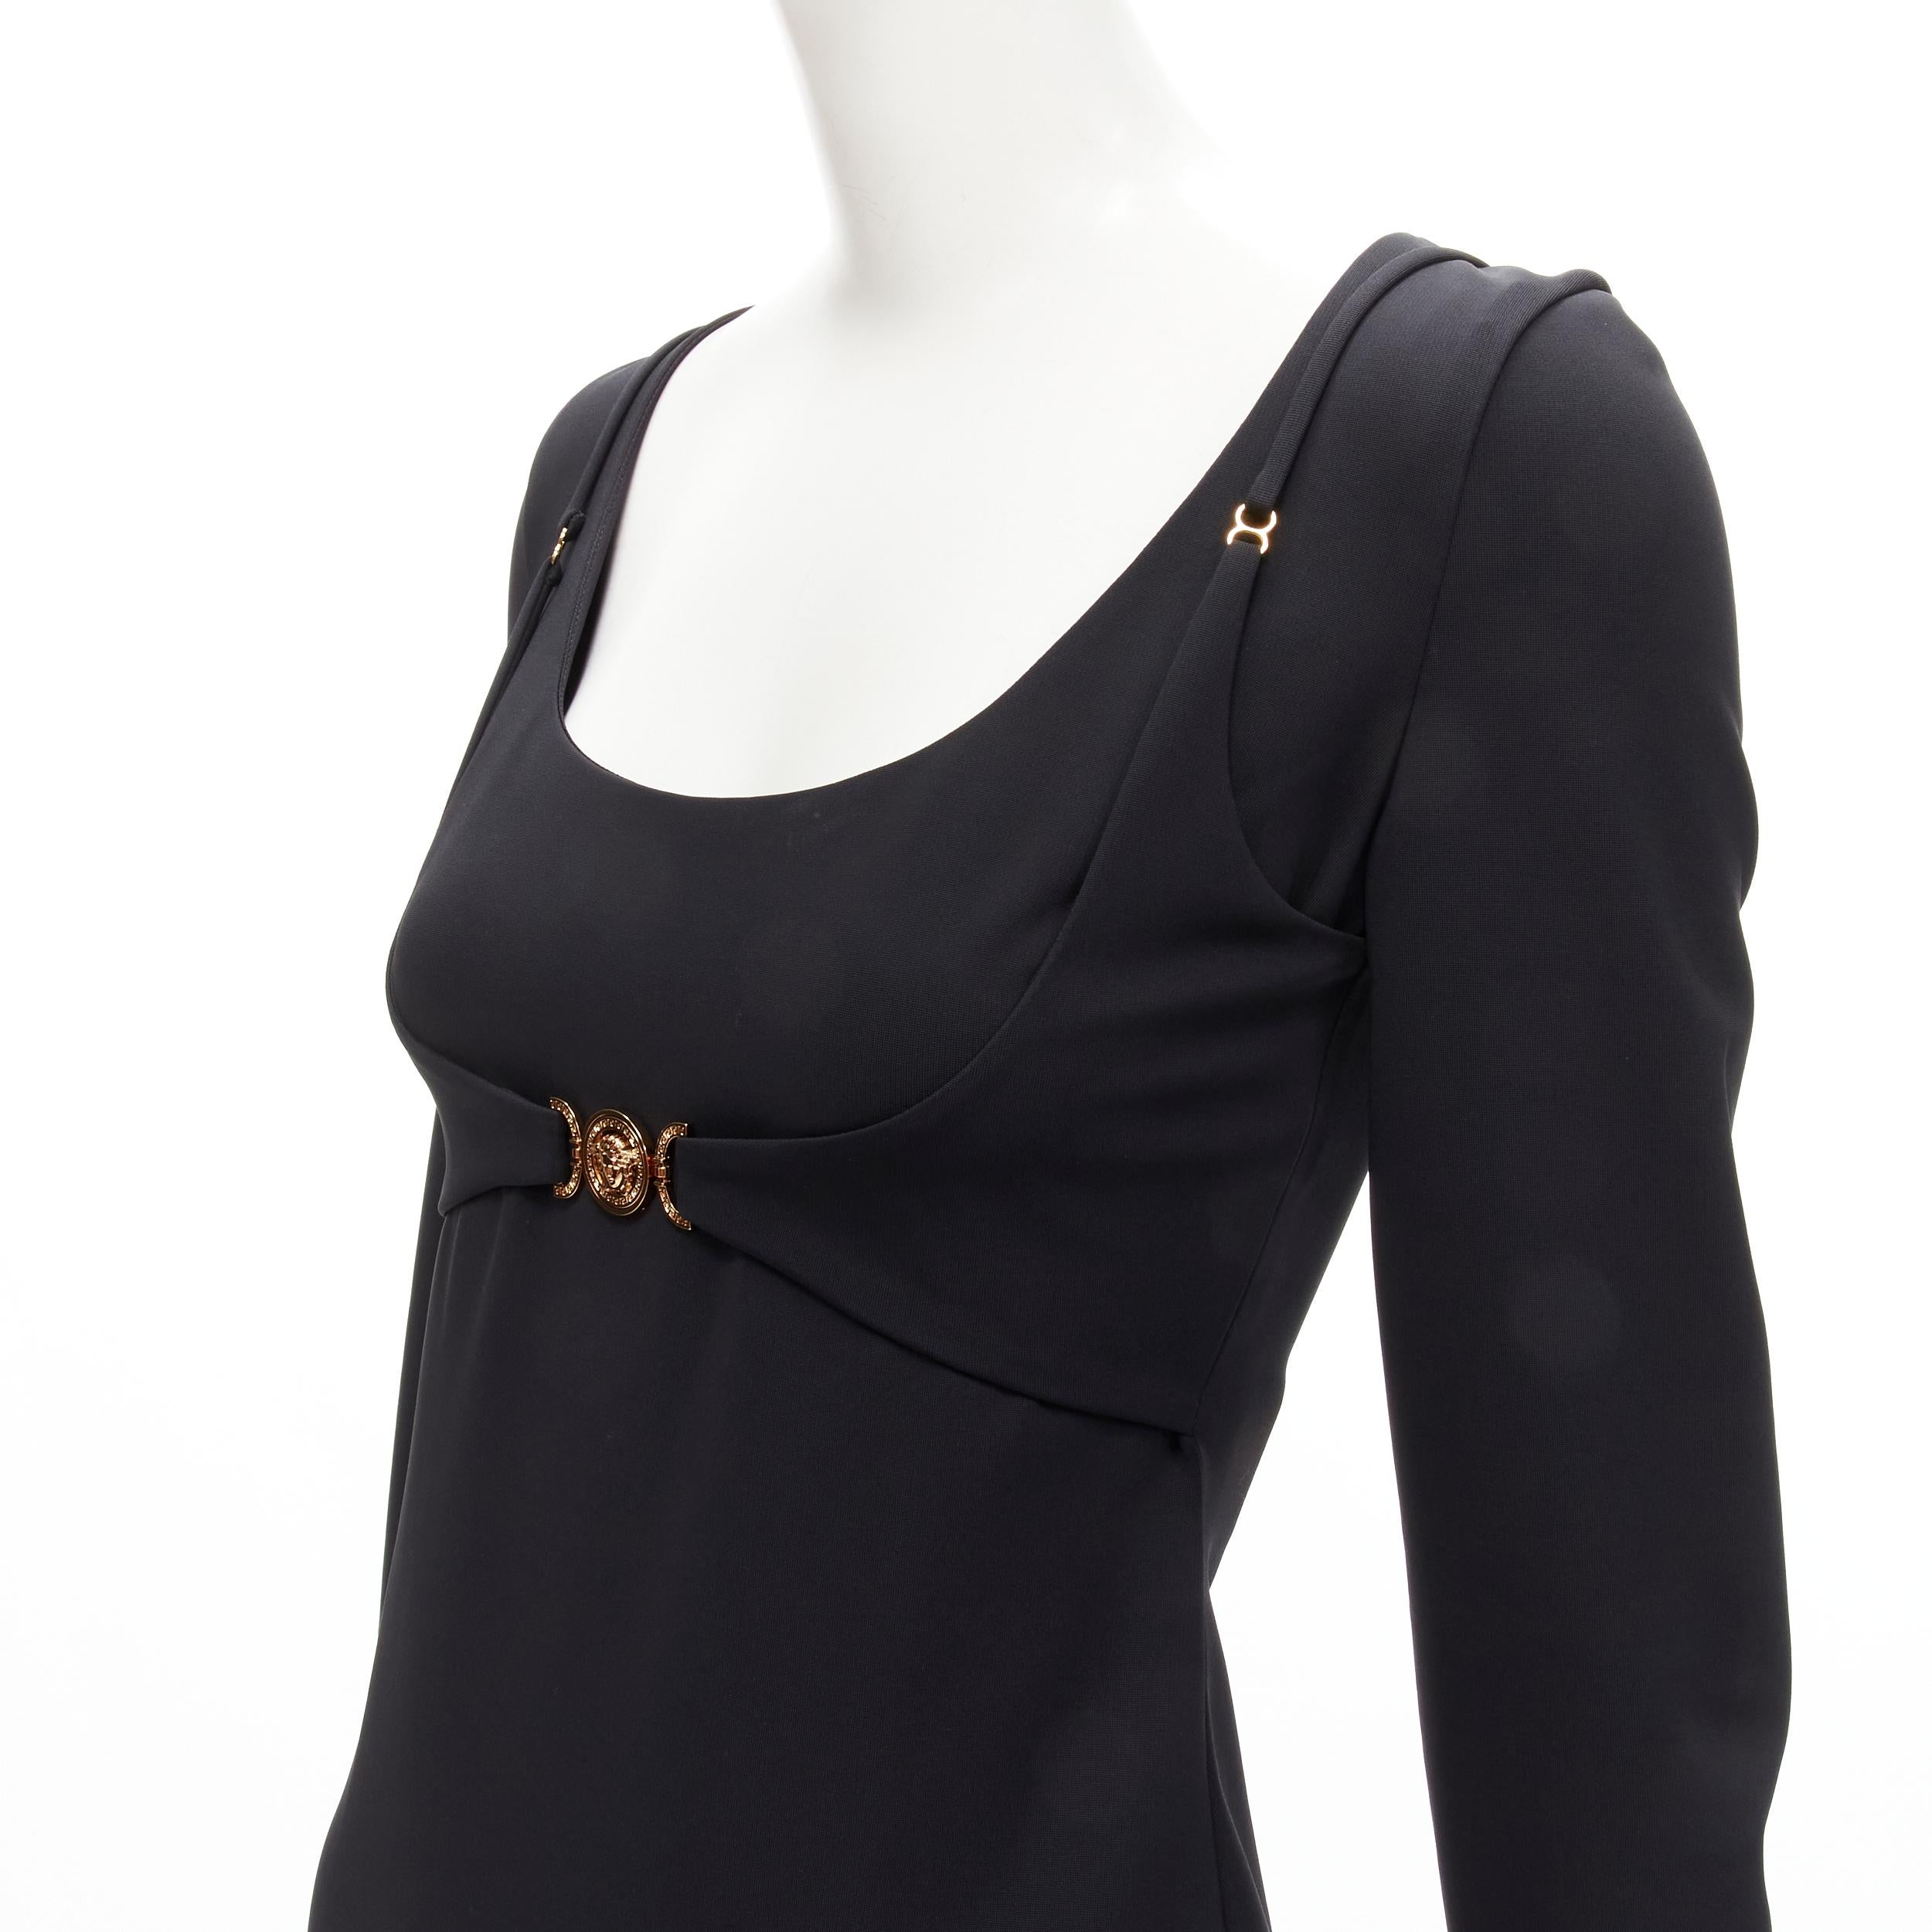 new VERSACE 2021 Tresor De La Mer gold Medusa bustier harness dress IT38 XS
Brand: Versace
Designer: Donatella Versace
Collection: 2021 Tresor De La Mer 
Material: Viscose
Color: Black
Pattern: Solid
Closure: Zip
Extra Detail: Scoop neckline.